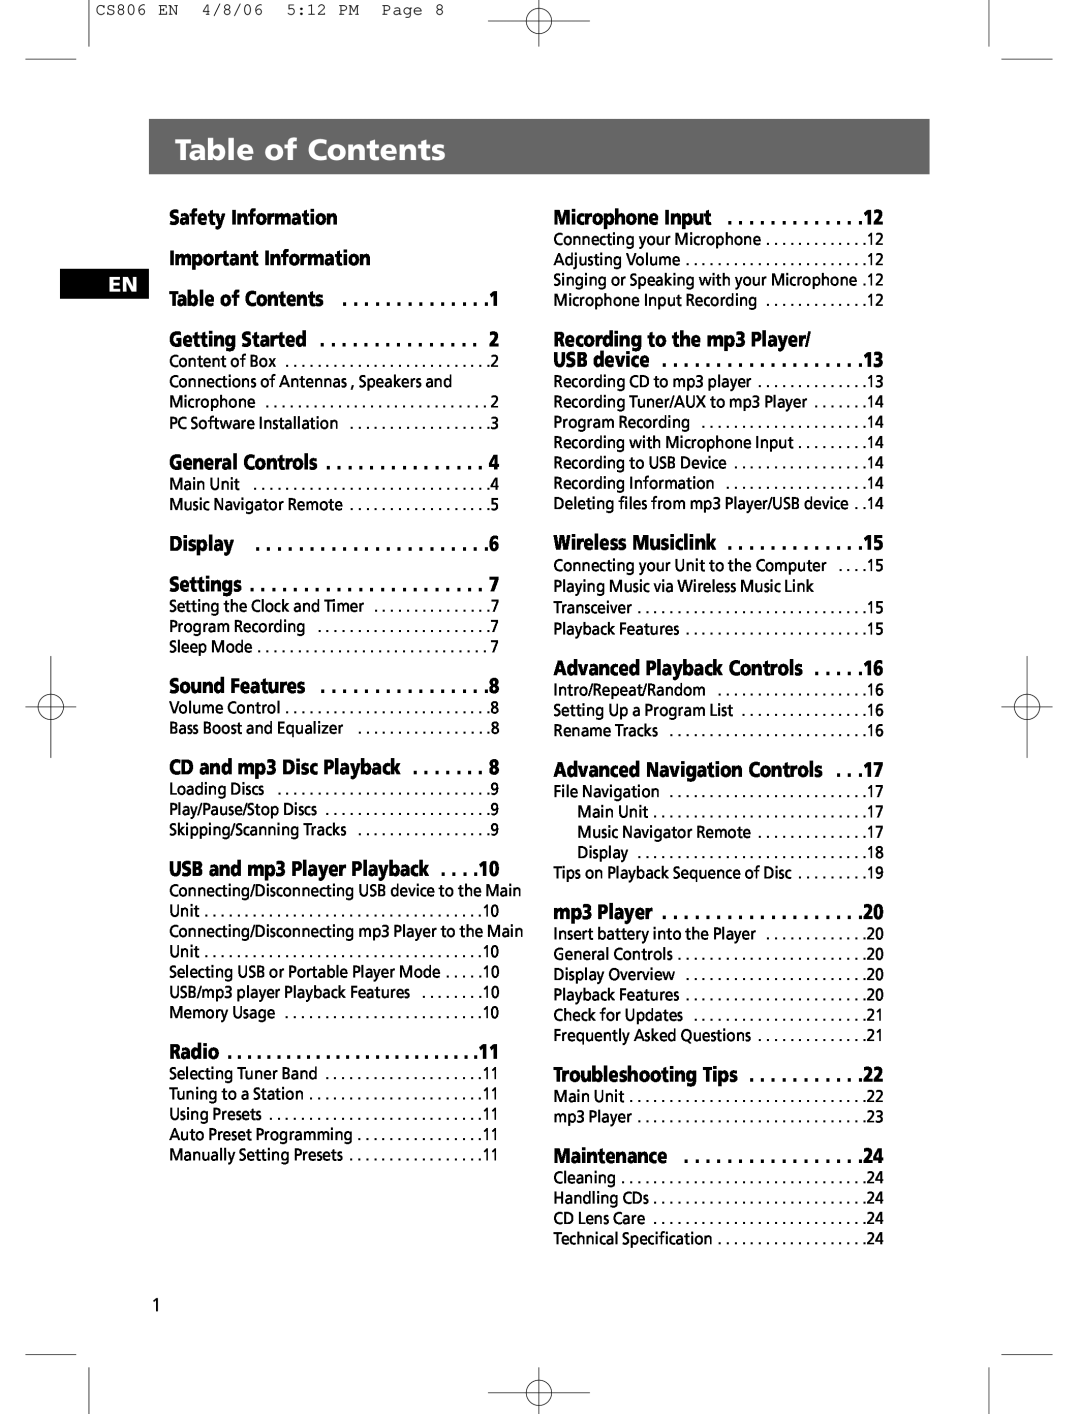 Technicolor - Thomson CS806 user manual Table of Contents 